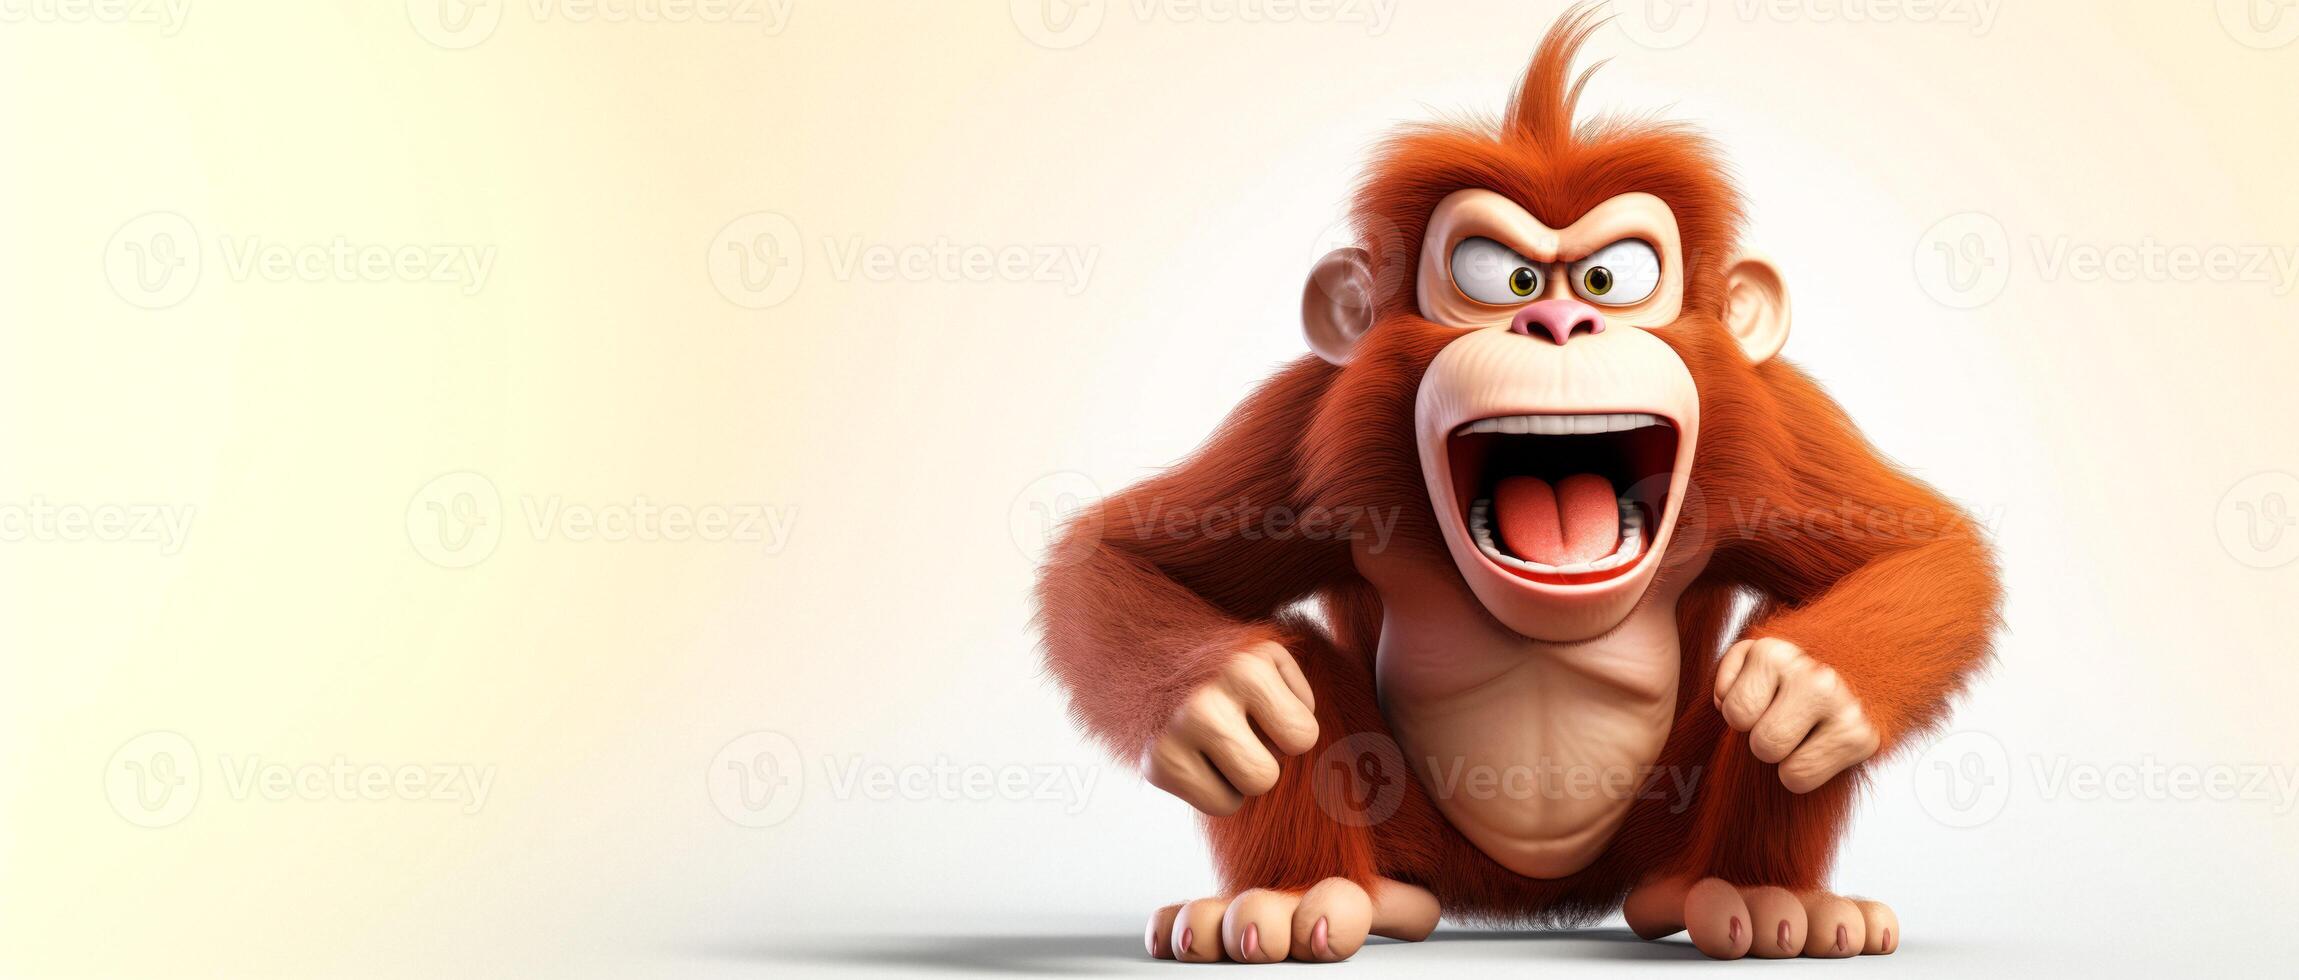 AI generated angry animated monkey on a white background Generative AI photo